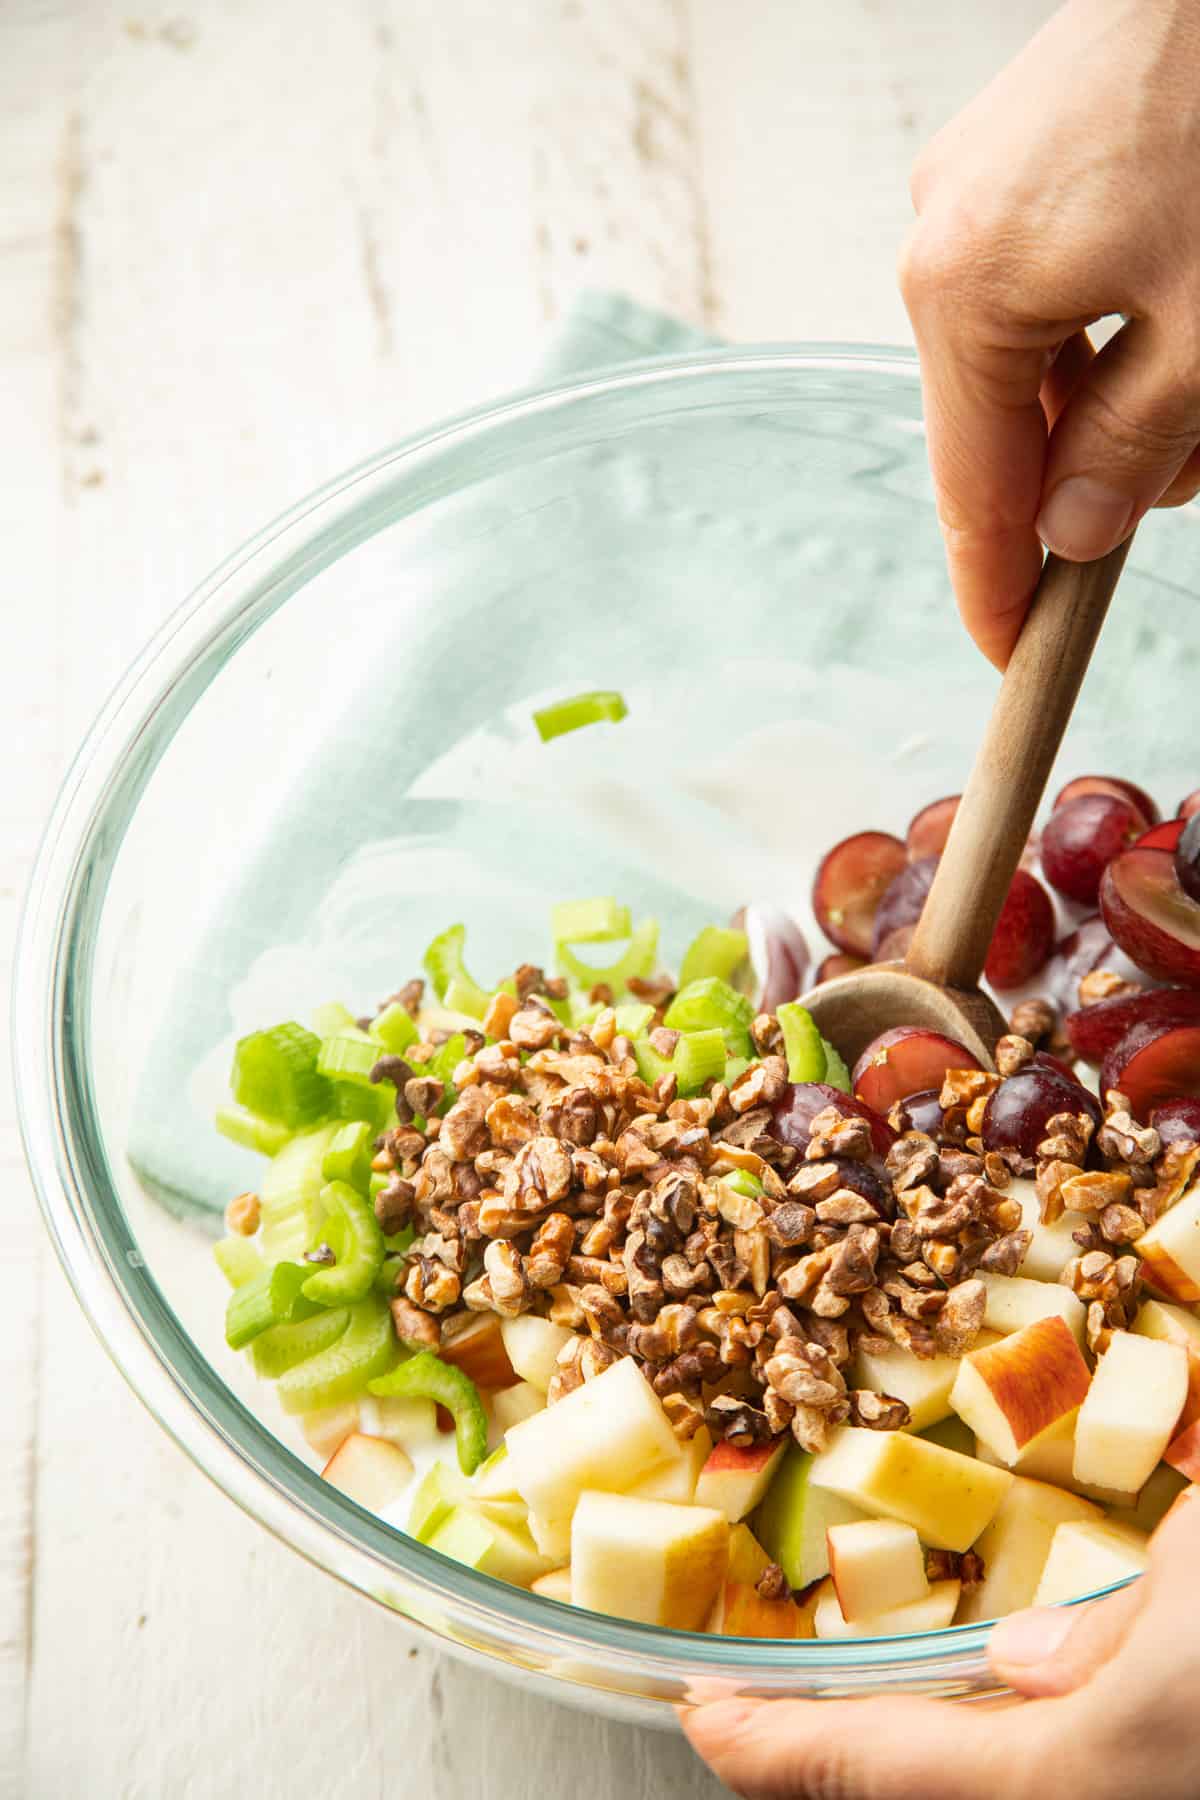 Hand stirring Vegan Waldorf Salad ingredients together in a bowl.